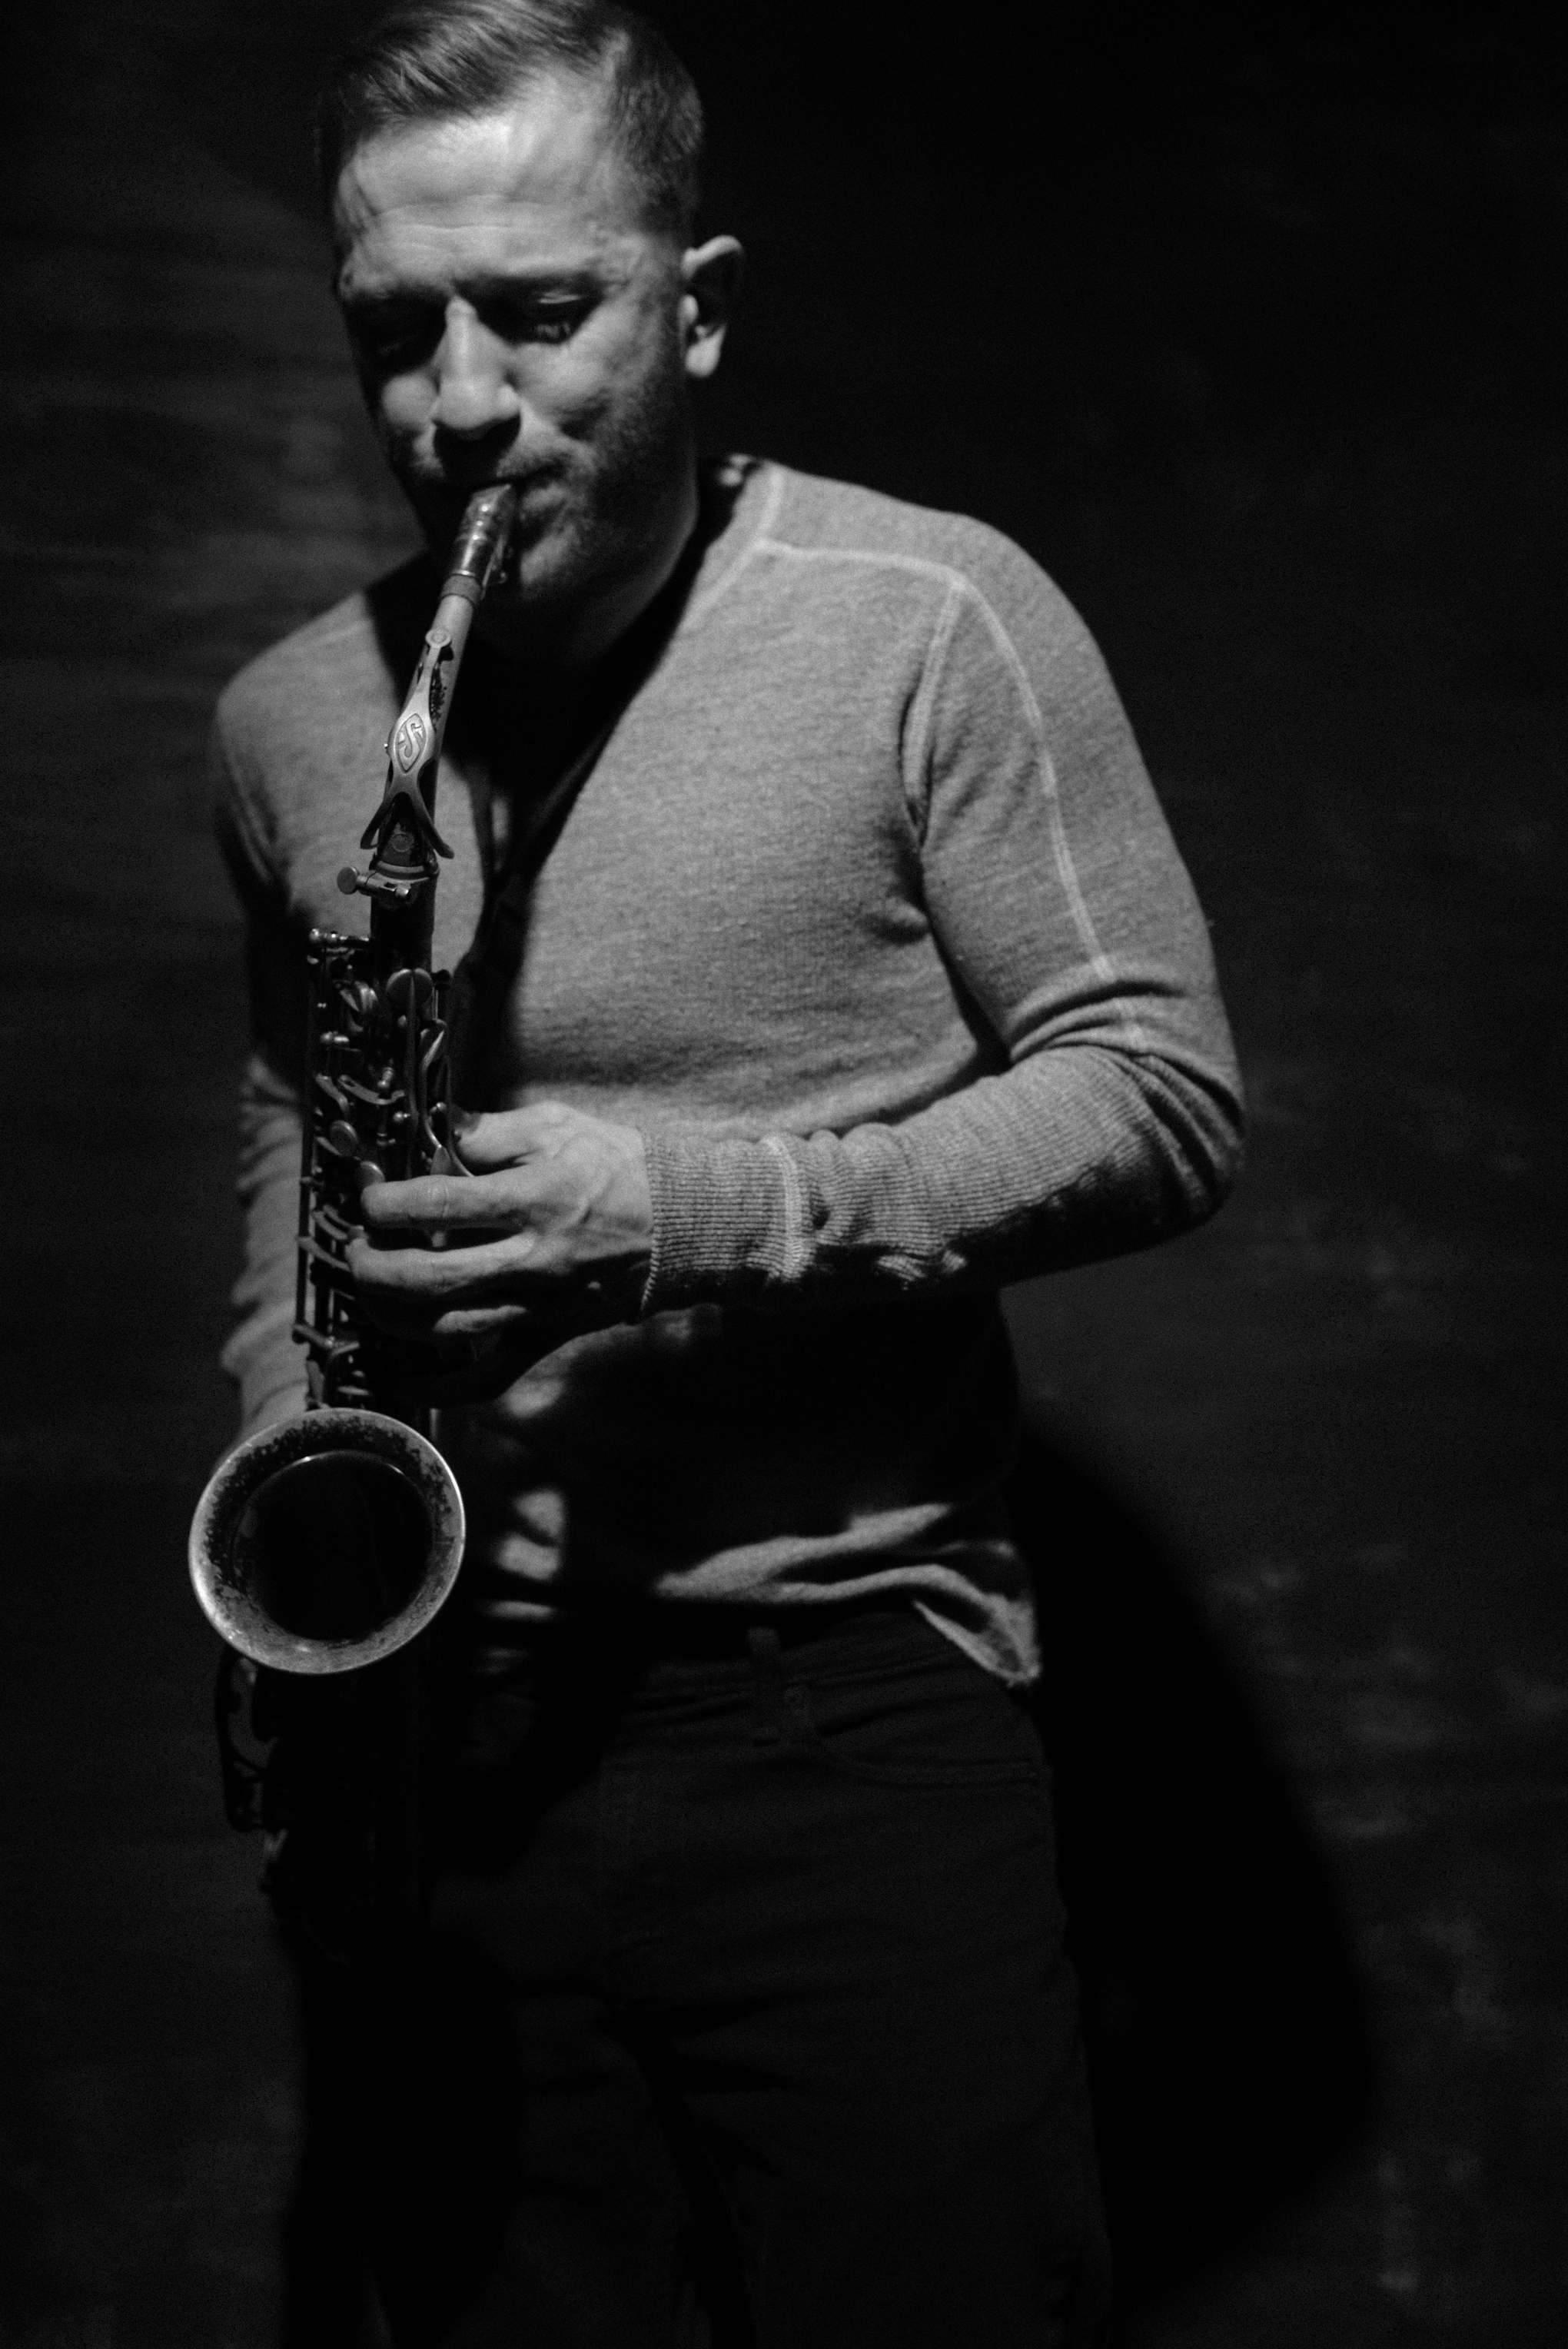 Wailing saxophone man Colin Stetson. Photo credit: Robert Nethery.